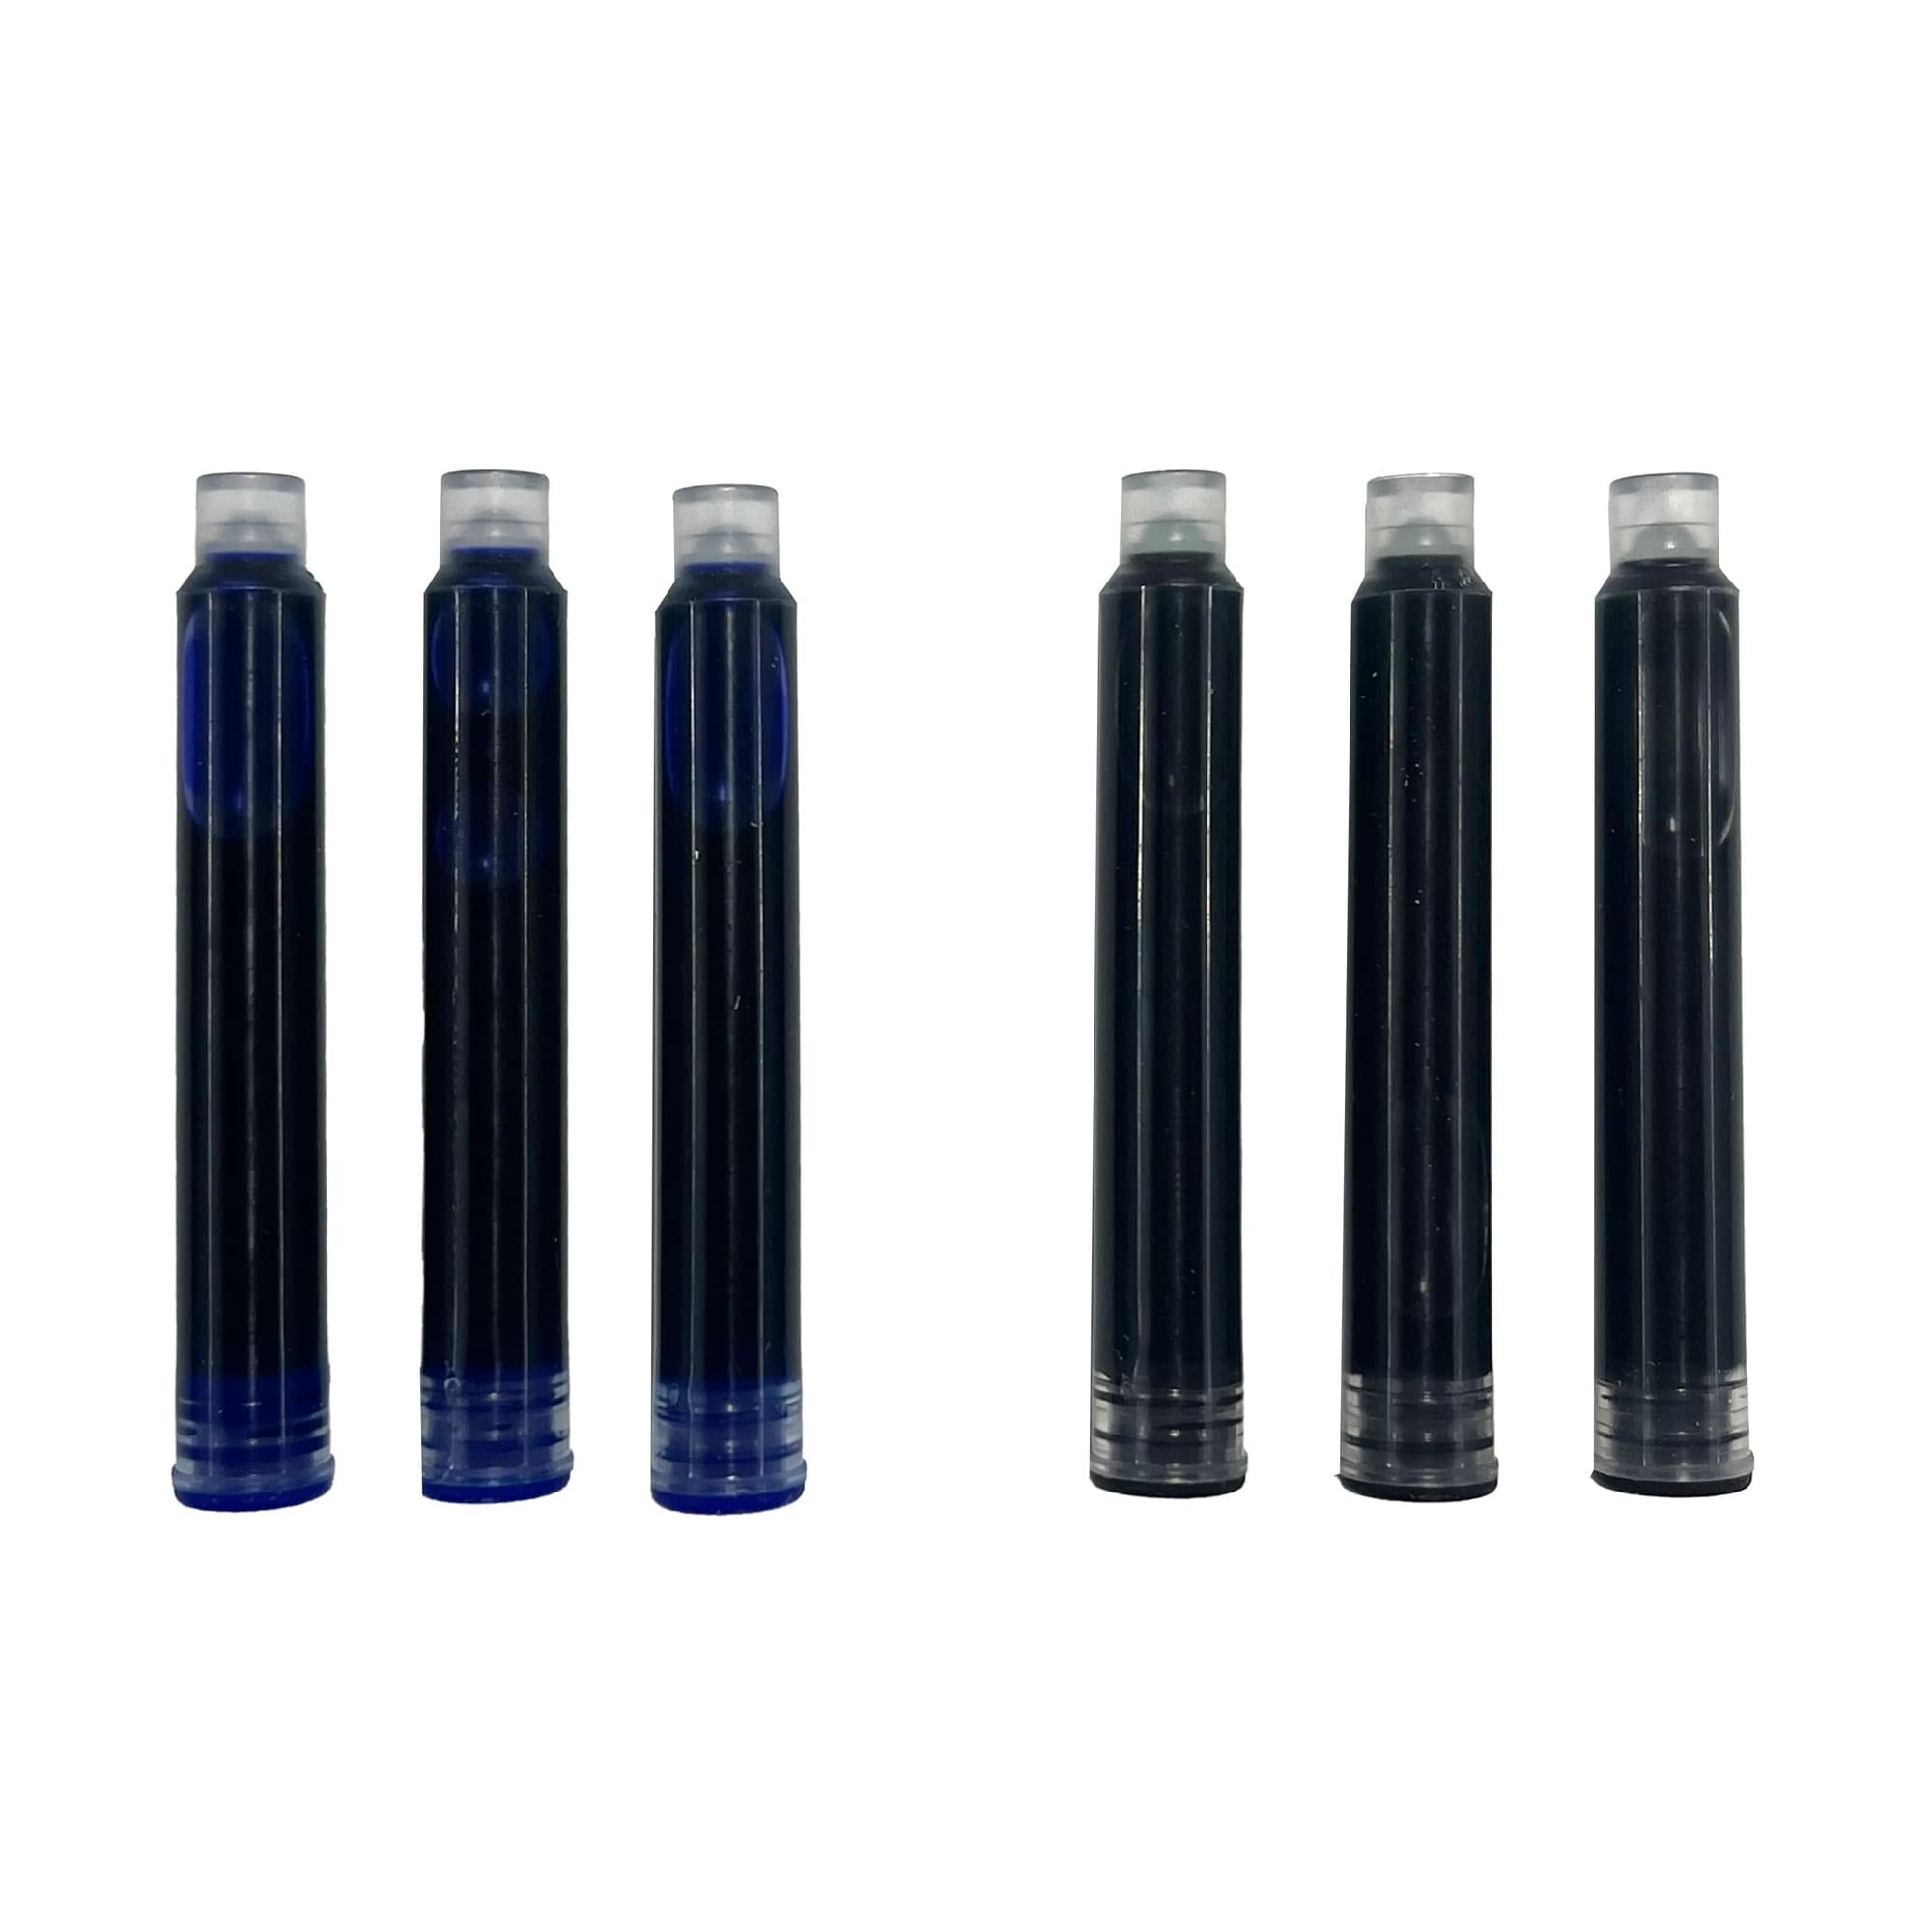 Ooly Splendid Fountain 1 Pen & 3 Refills Black | 132-069